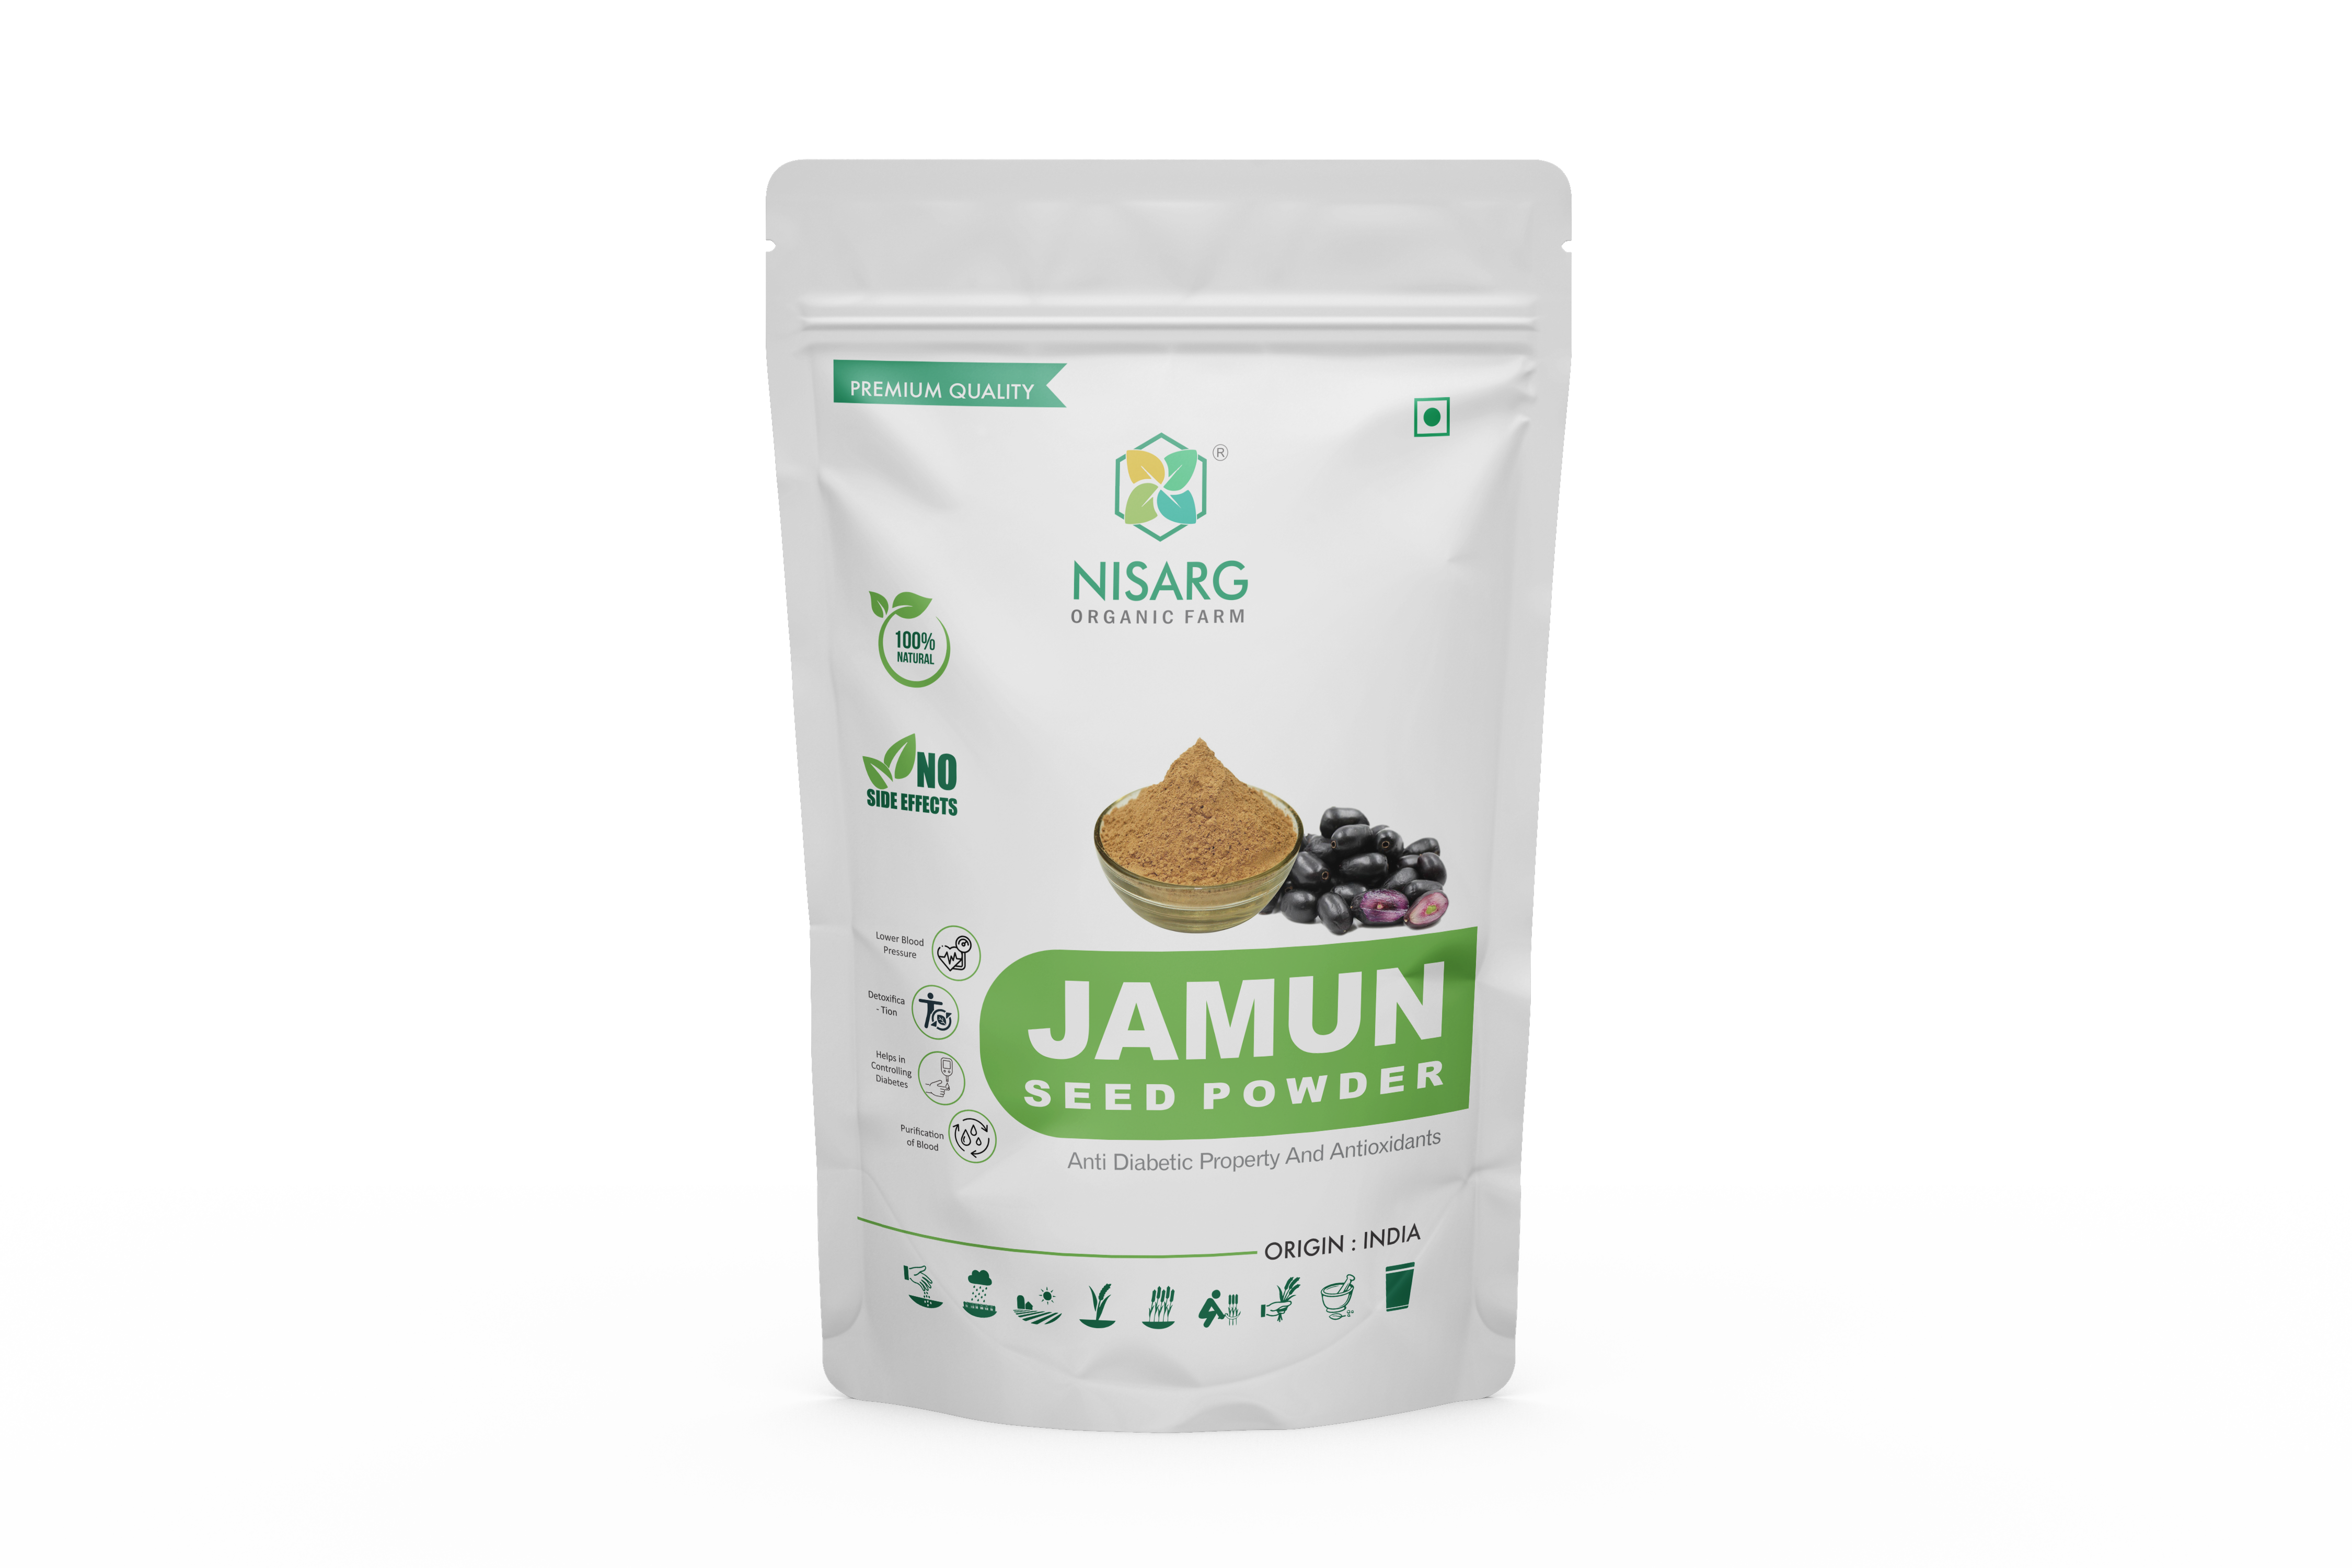 Nisarg Organic Farm Jamun Seed Powder